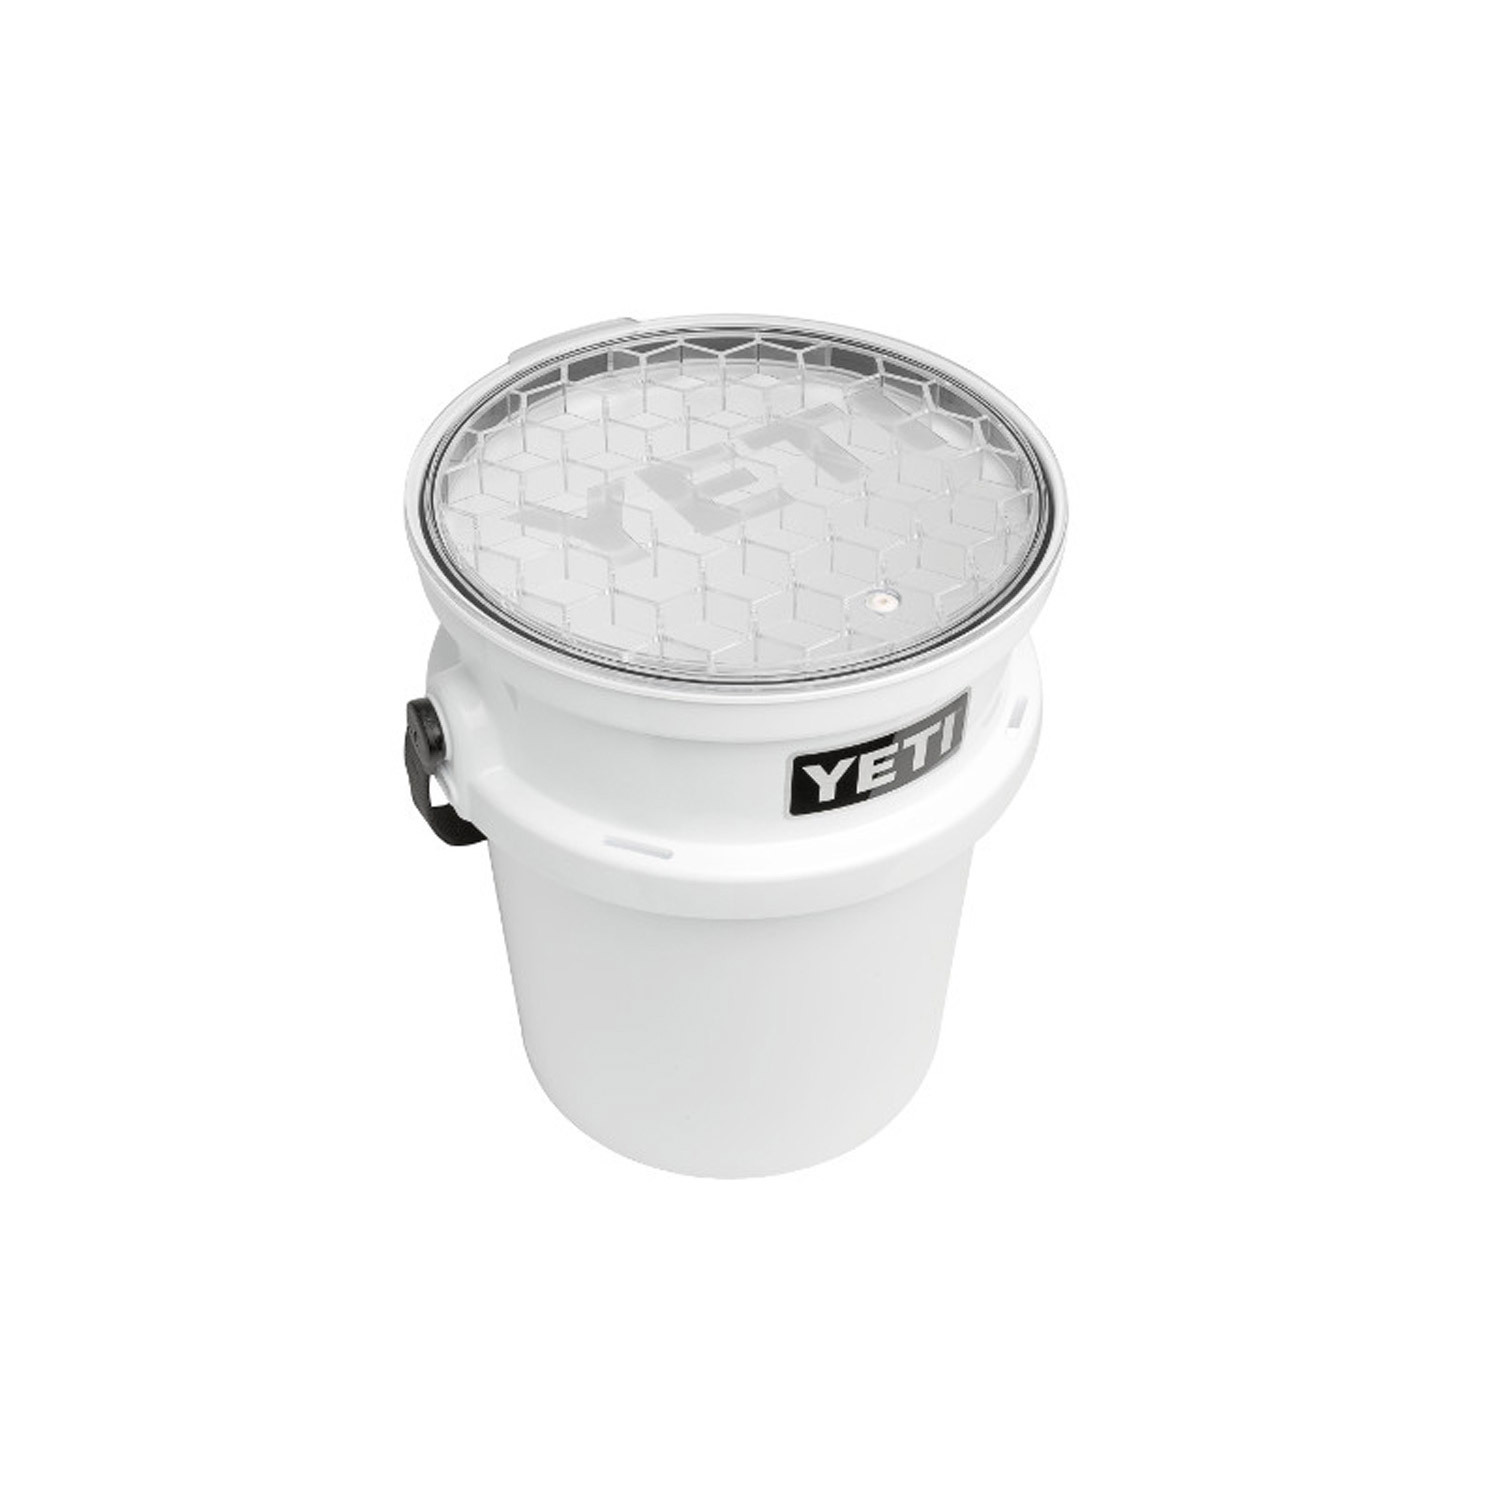 Leaktite - 5-gal. Bucket Companion Cooler #LKT-BUCKETLINER